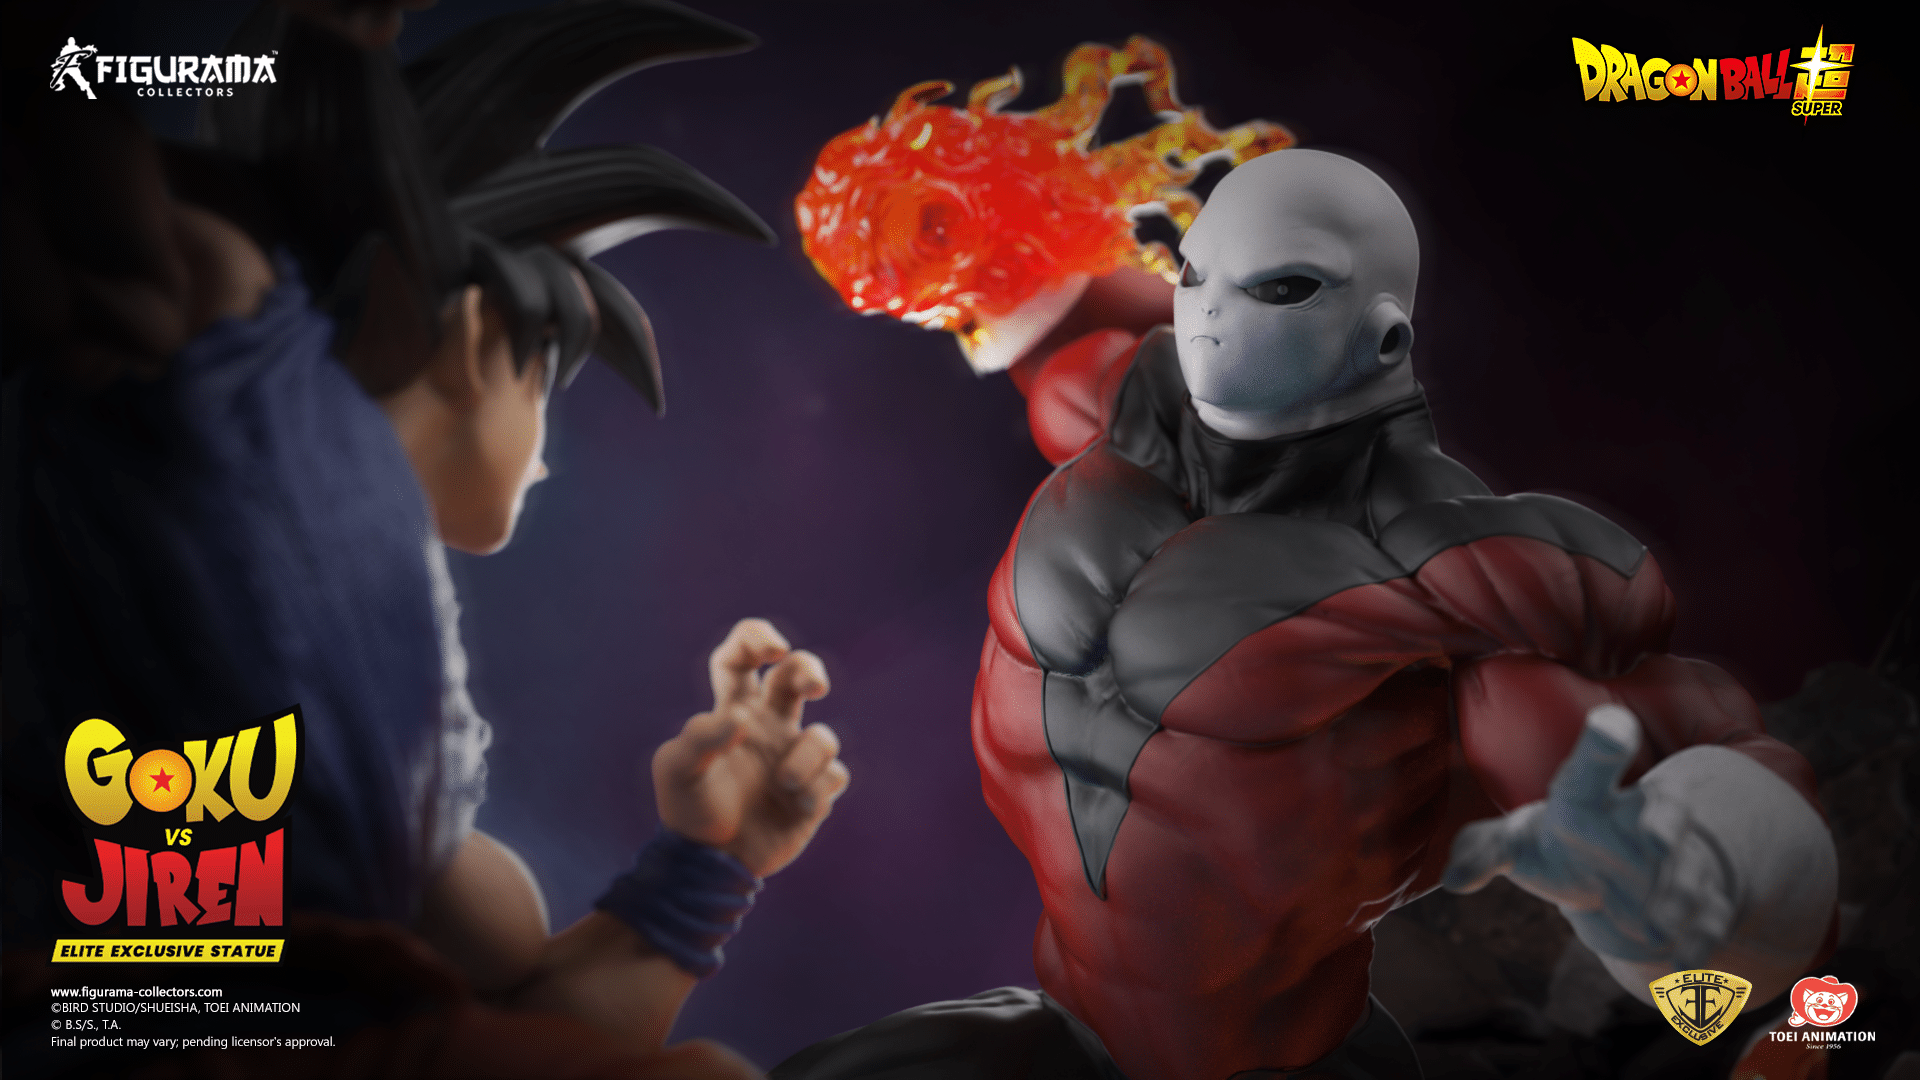 Figurama Goku vs Jiren Statue Dragon Ball Super Statue